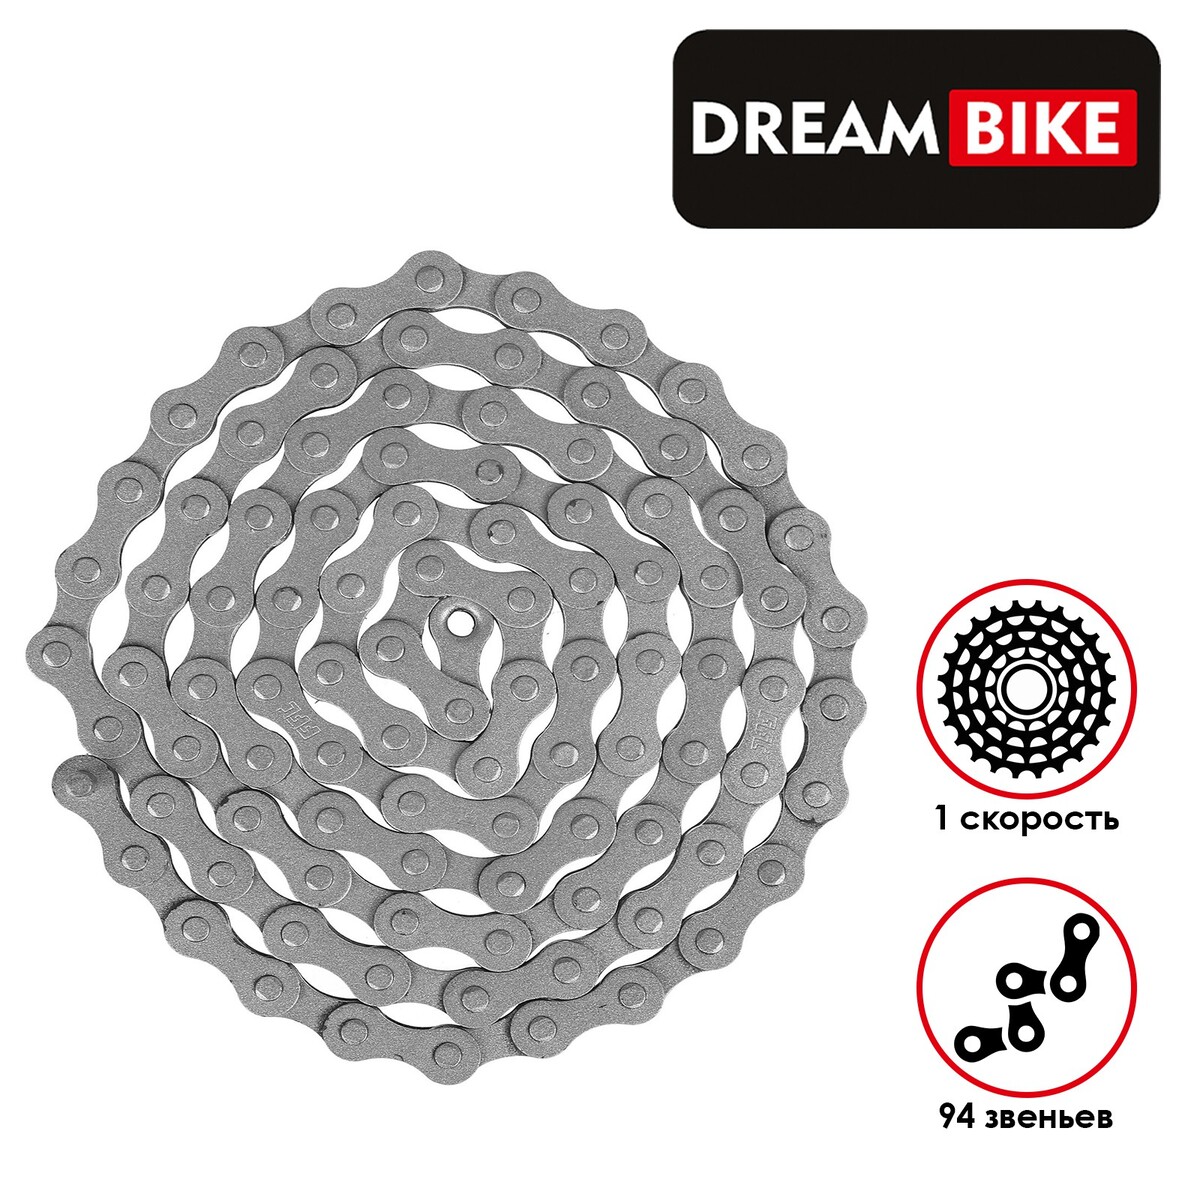 Цепь dream bike, 1 скорость замок цепи dream bike для односкоростных цепей